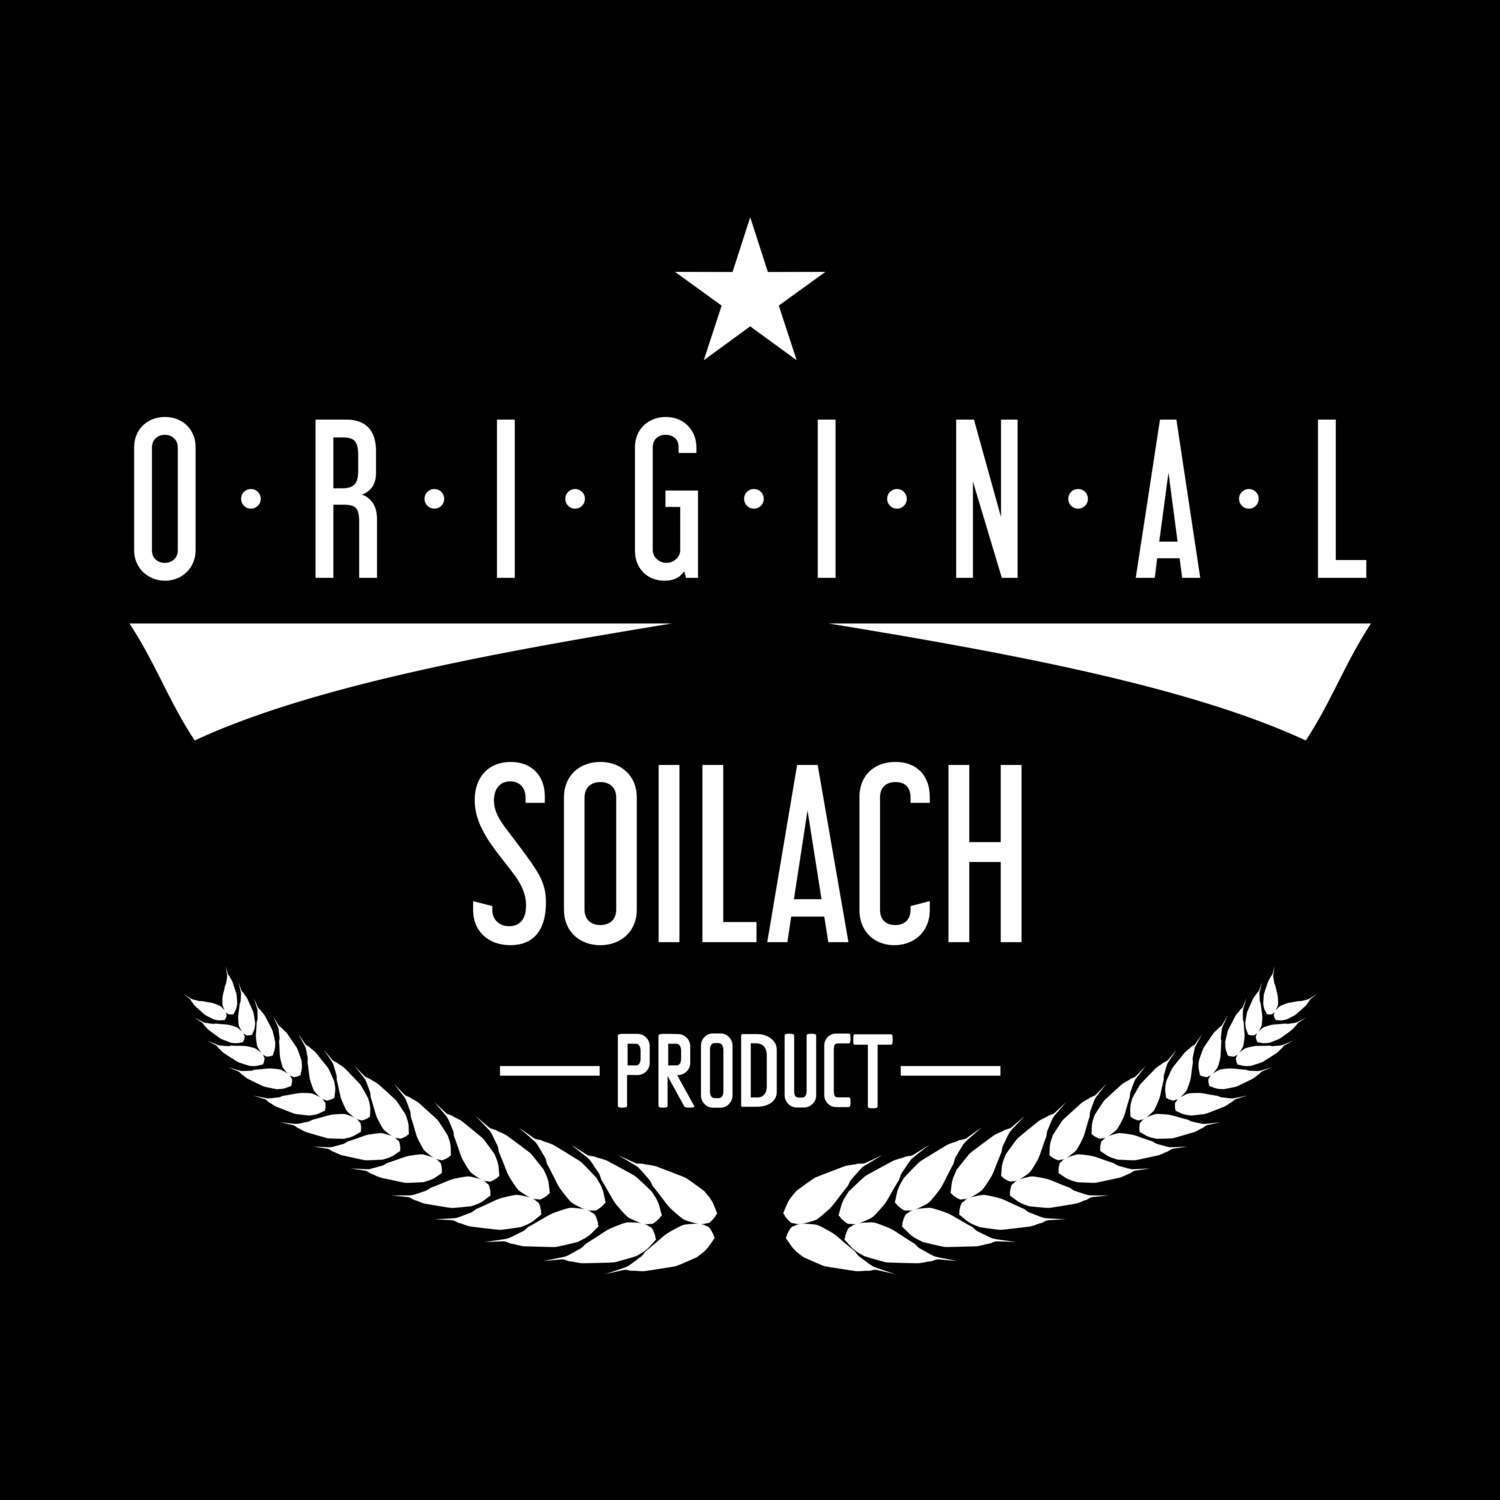 Soilach T-Shirt »Original Product«